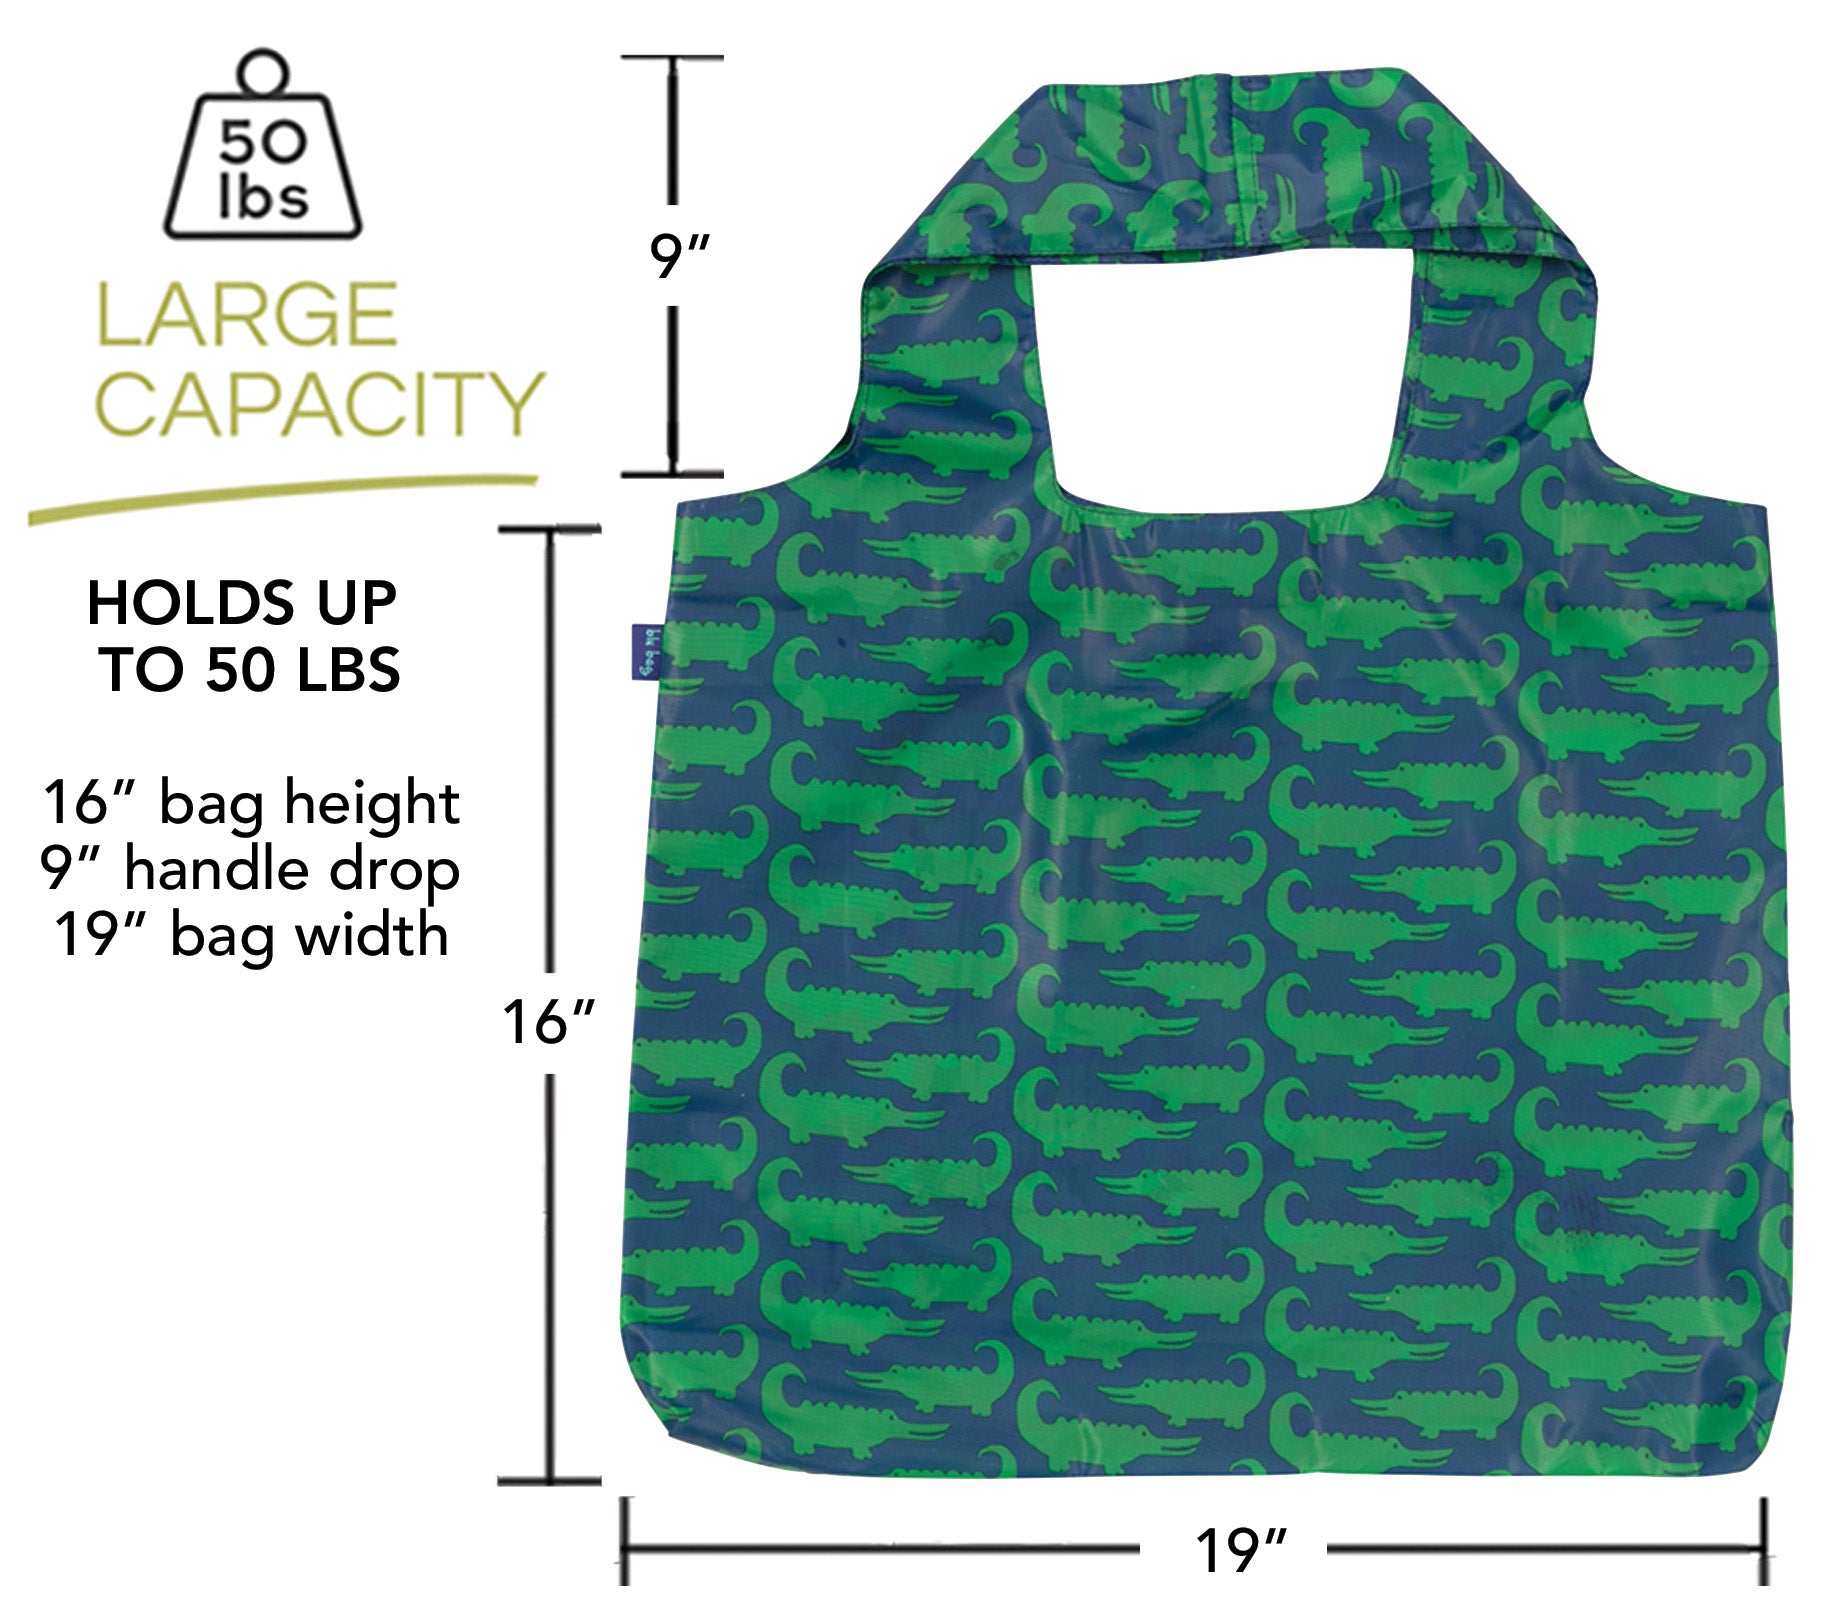 Alligators Blu Bag Reusable Shopping Bag Reusable Shopping Bag - rockflowerpaper